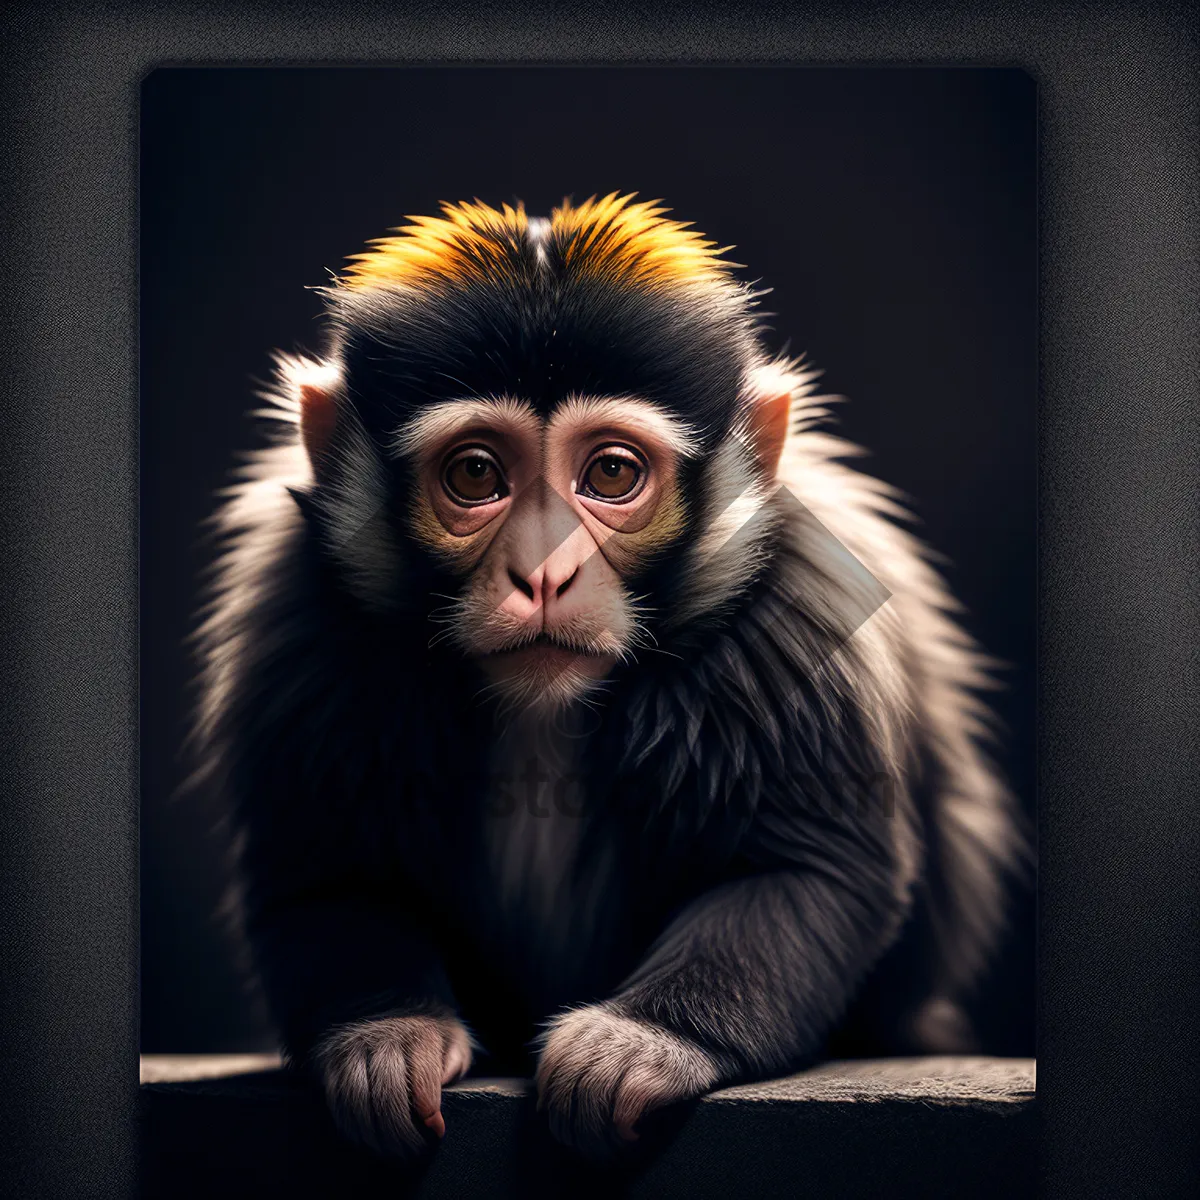 Picture of Macaque Face: Majestic Primate in Wildlife Habitat.